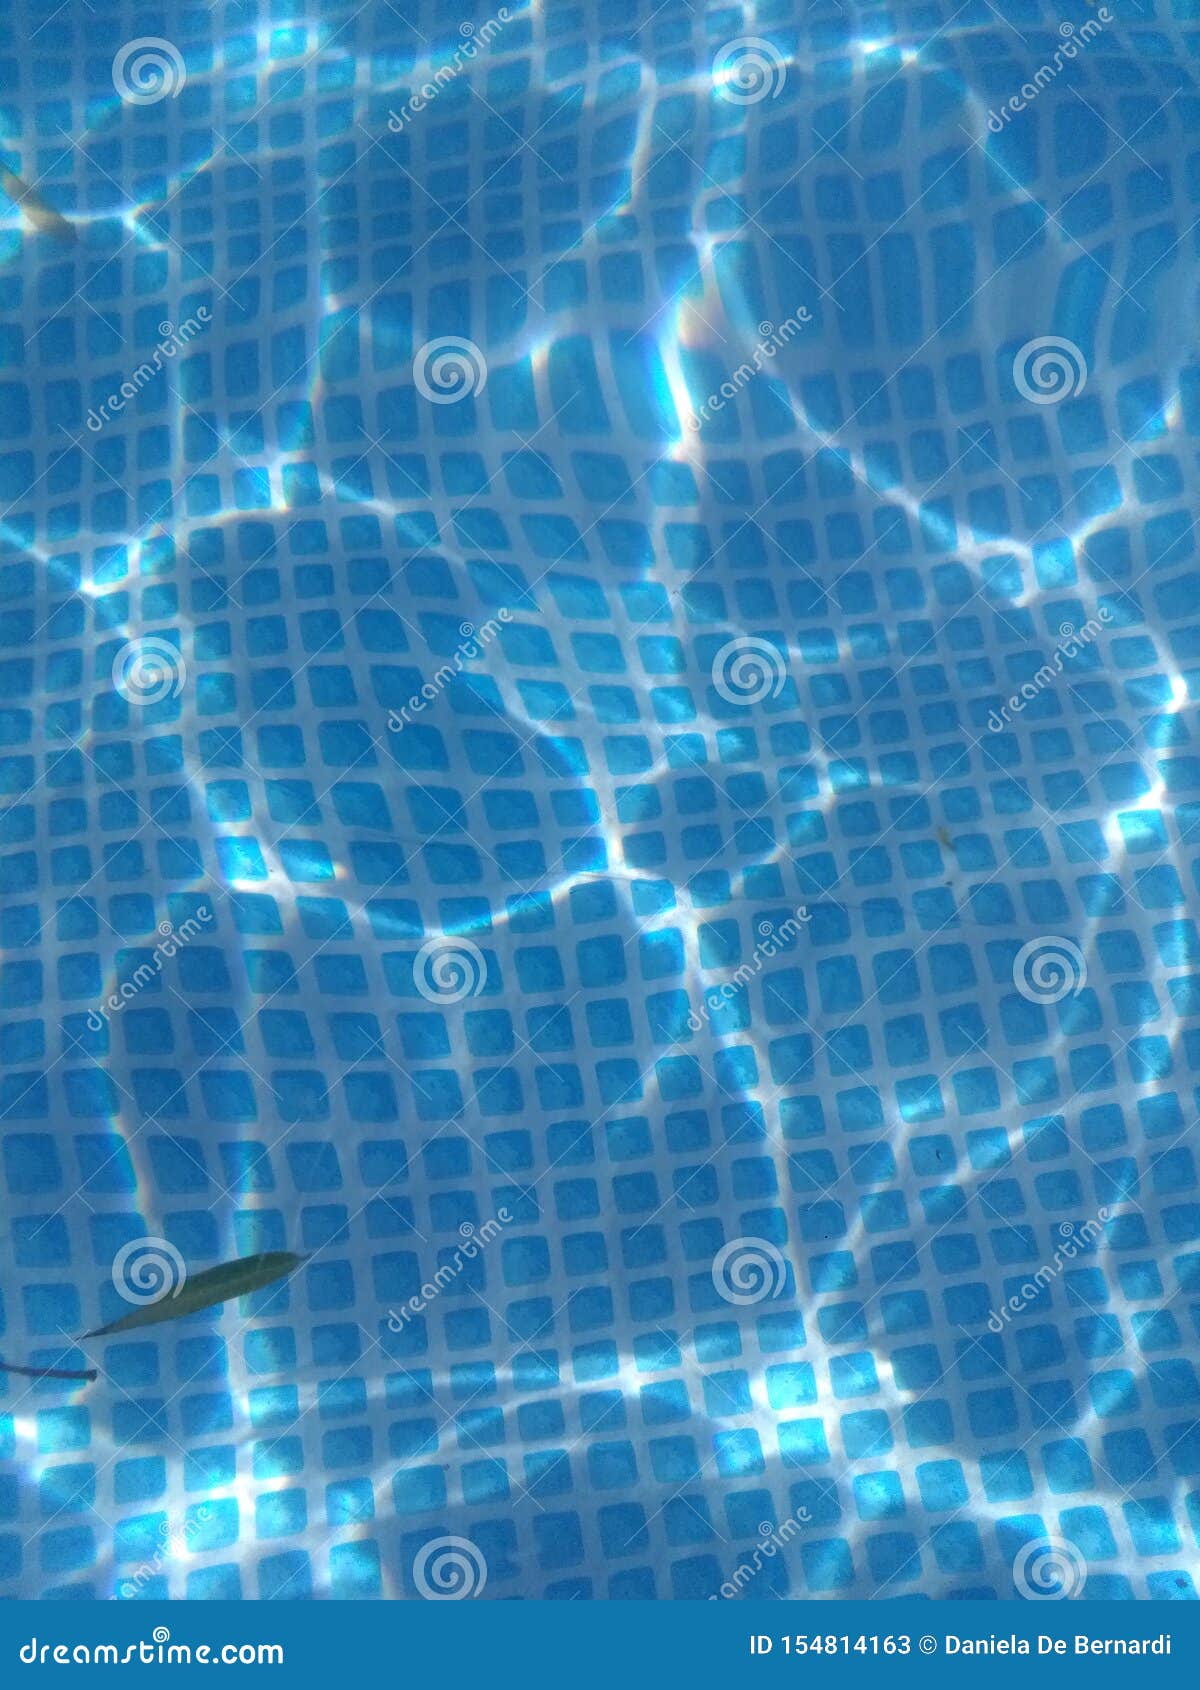 Tumblr water. stock image. Image of water, pool, summer - 154814163